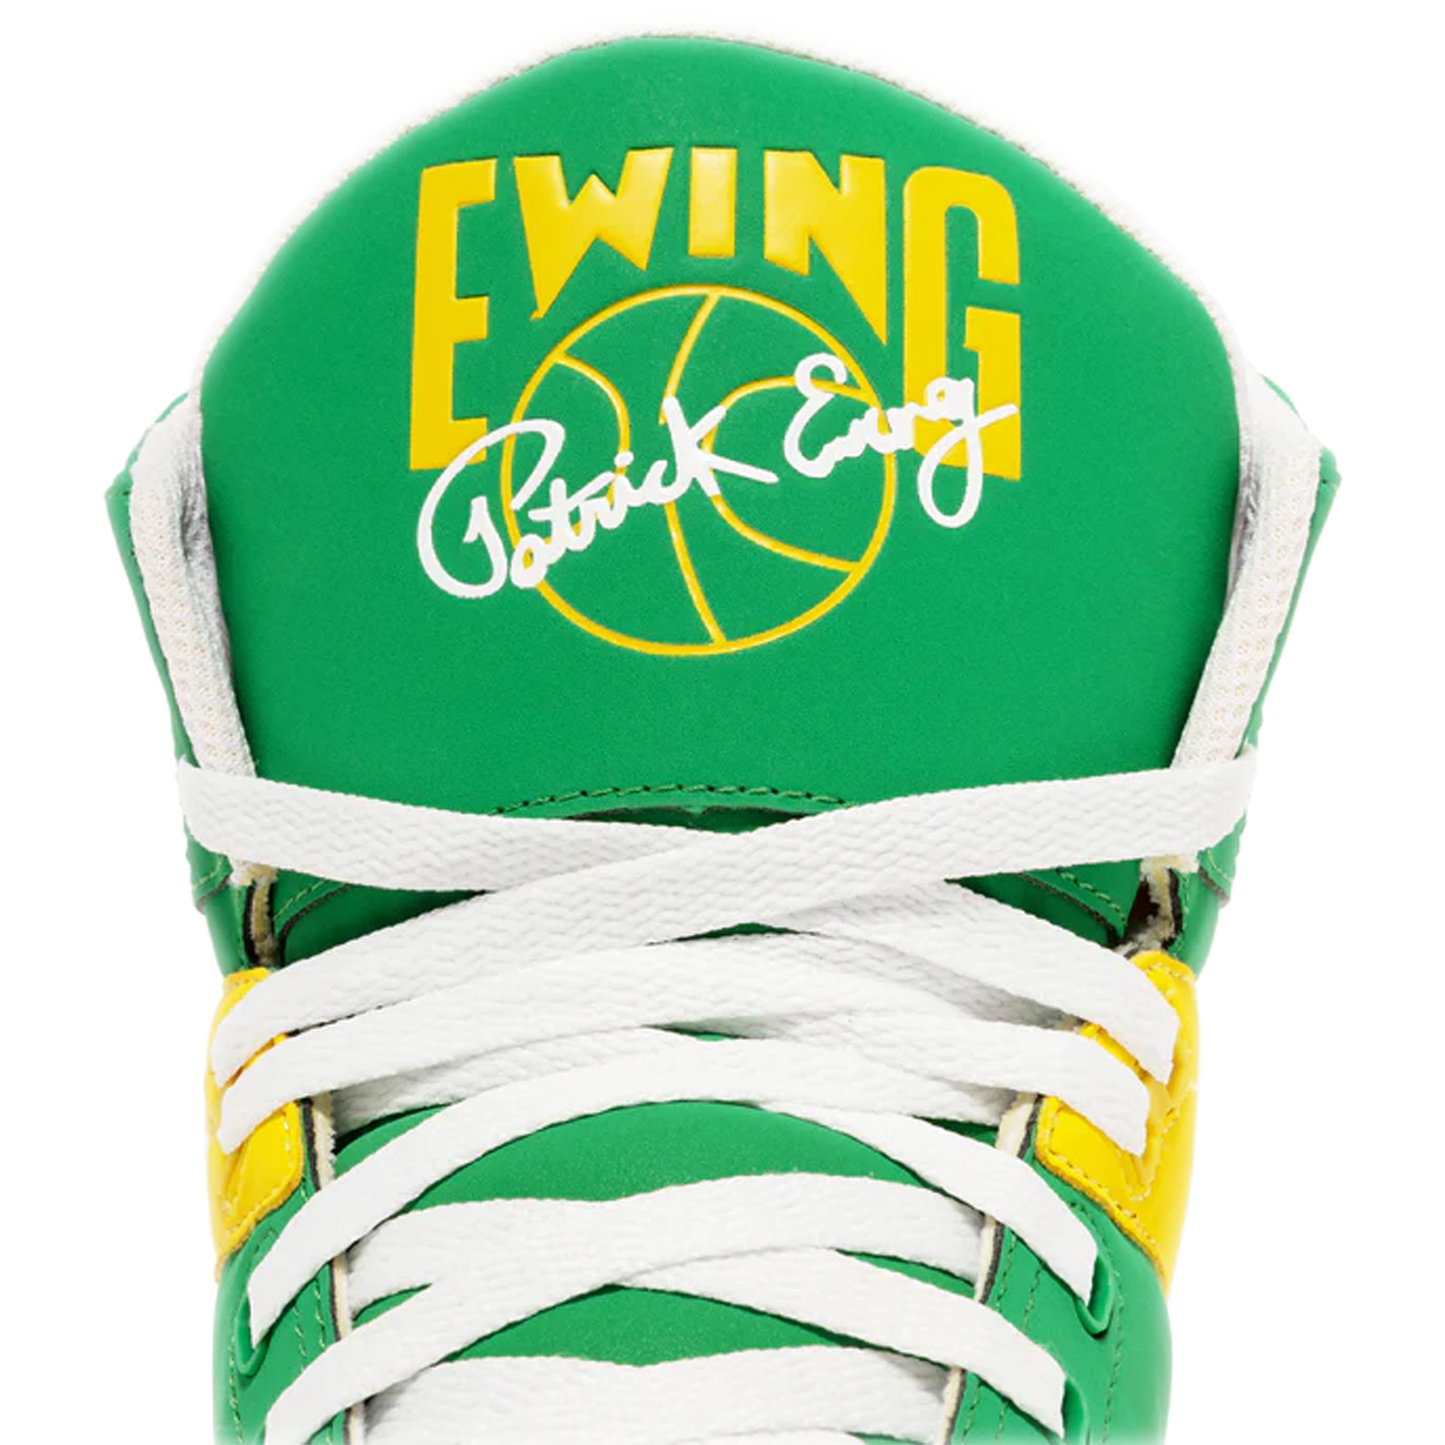 Ewing 33 HI SEATTLE Green/White/Lemon